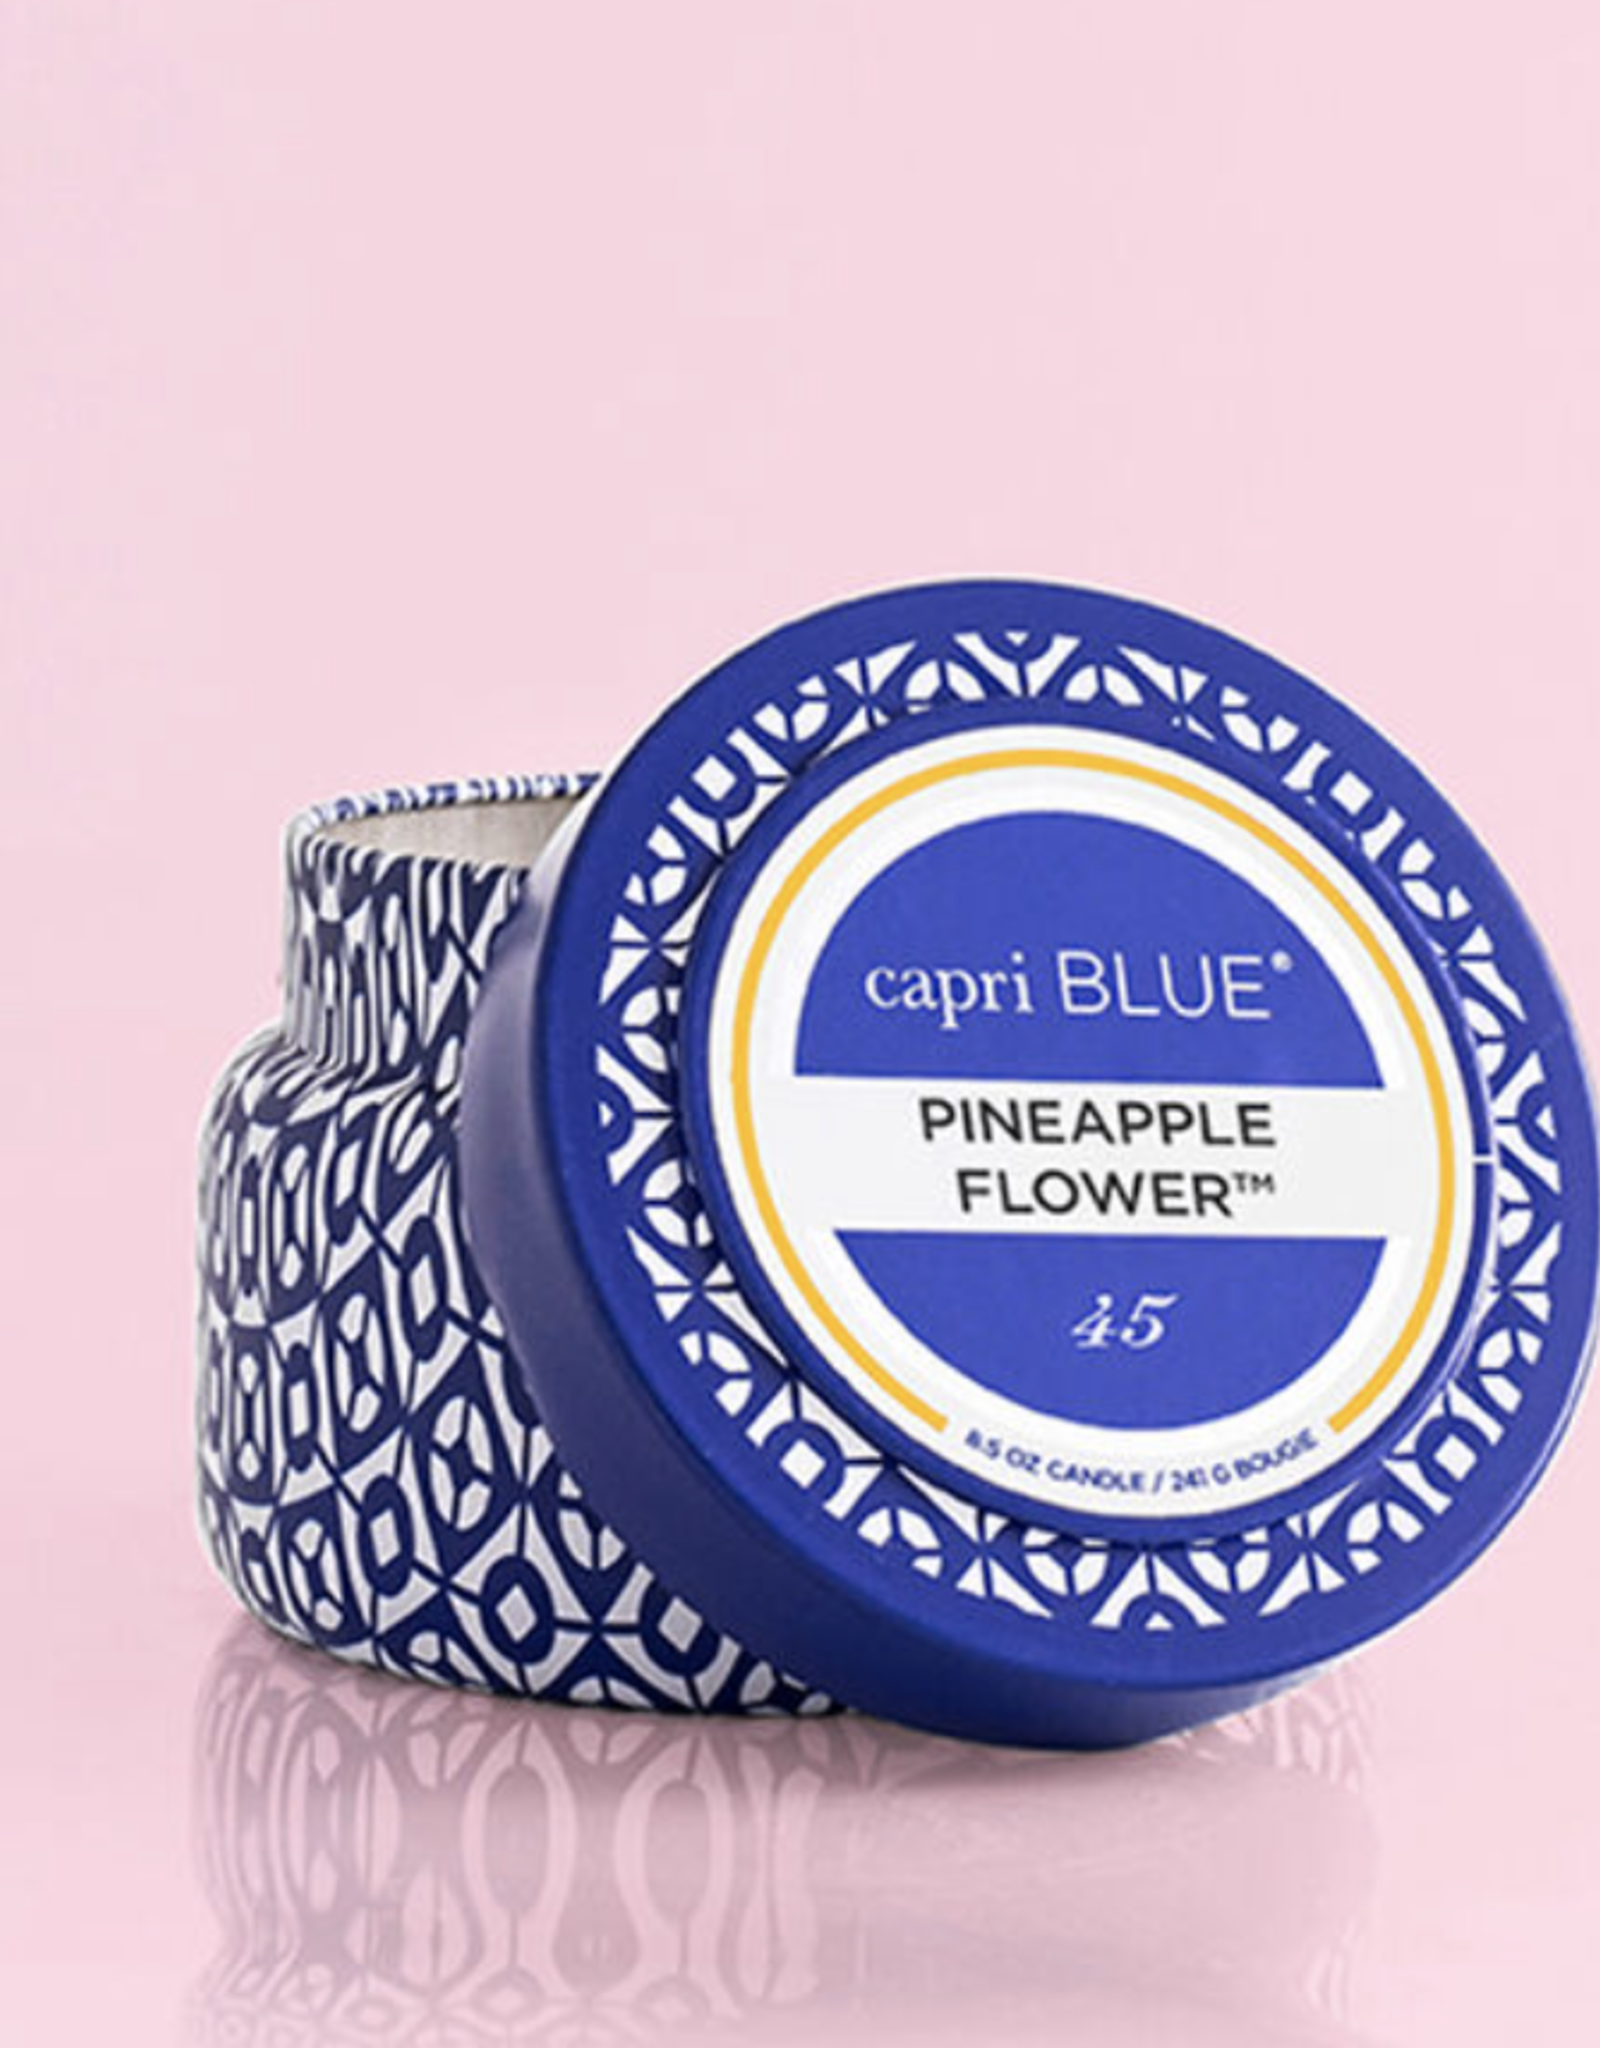 Capri Blue Travel Tin 8.5oz Candle Pineapple Flower